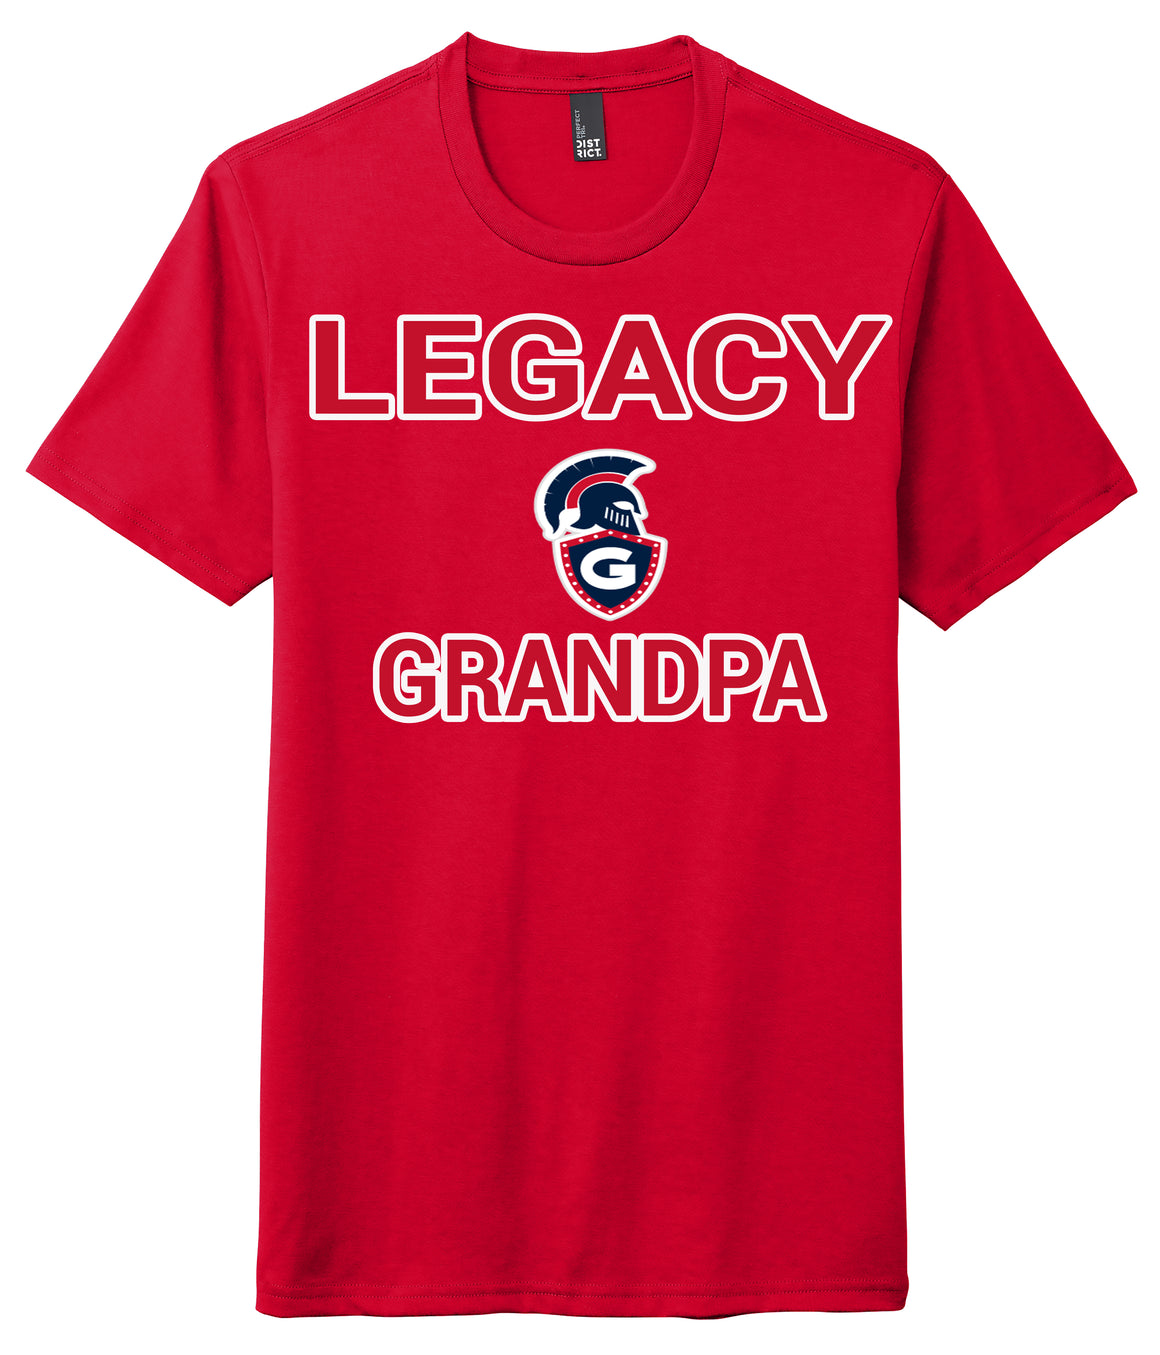 Legacy Traditional School Glendale - Grandpa Shirt